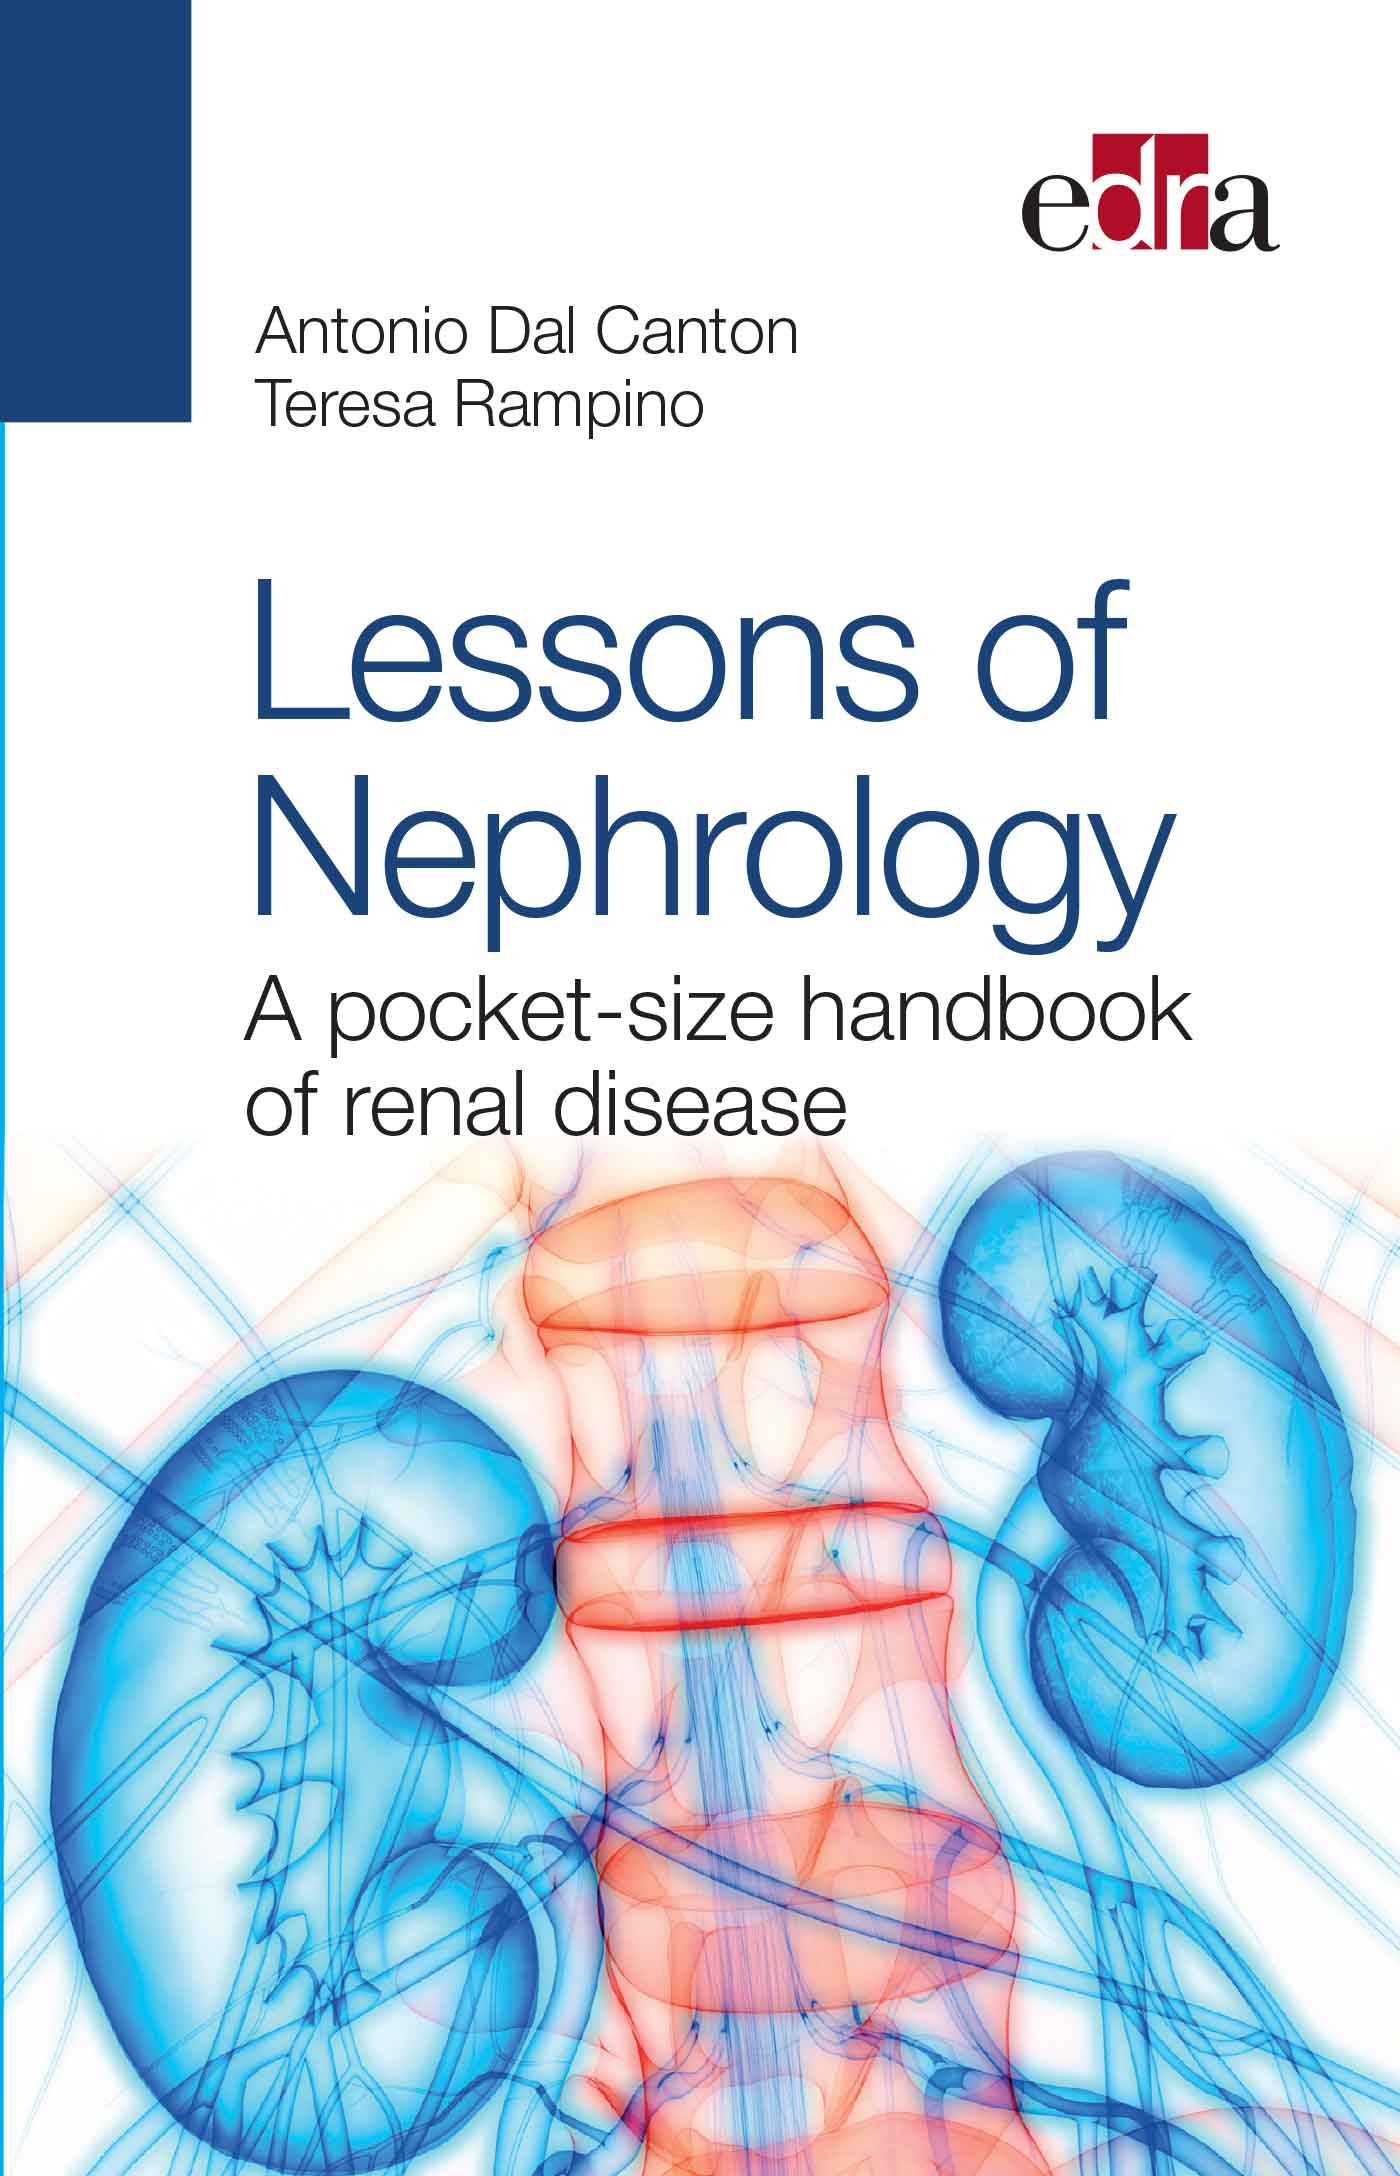 Lesson of nephrology  - A pocket-size handbook of Renal Disease (9788821453298)